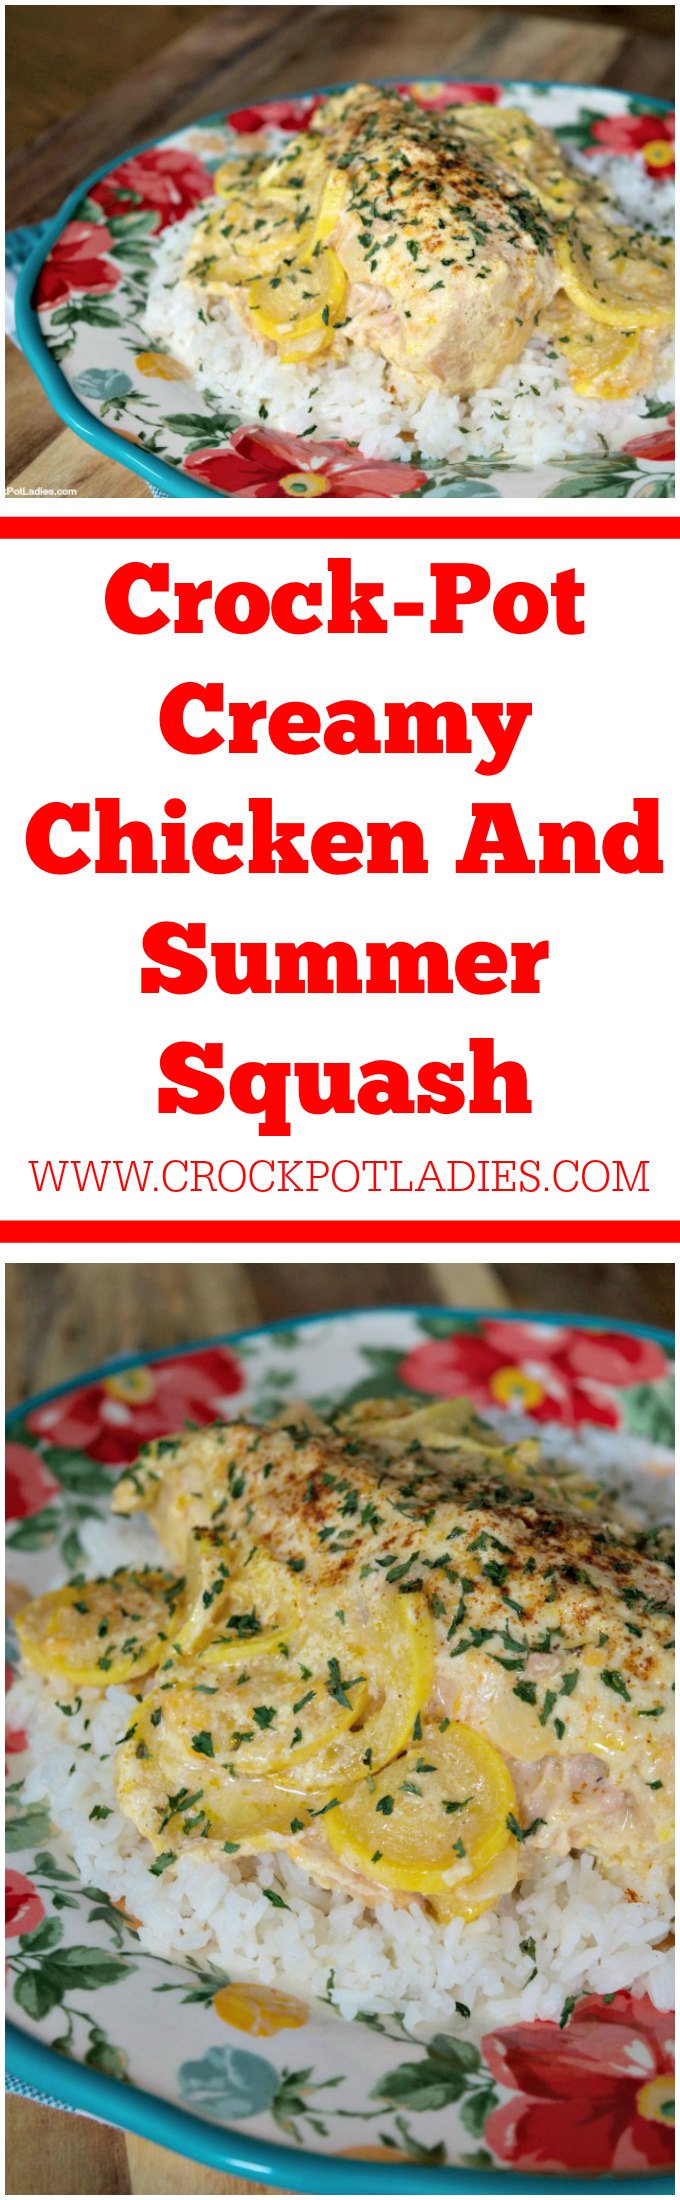 Crock-Pot Creamy Chicken And Summer Squash